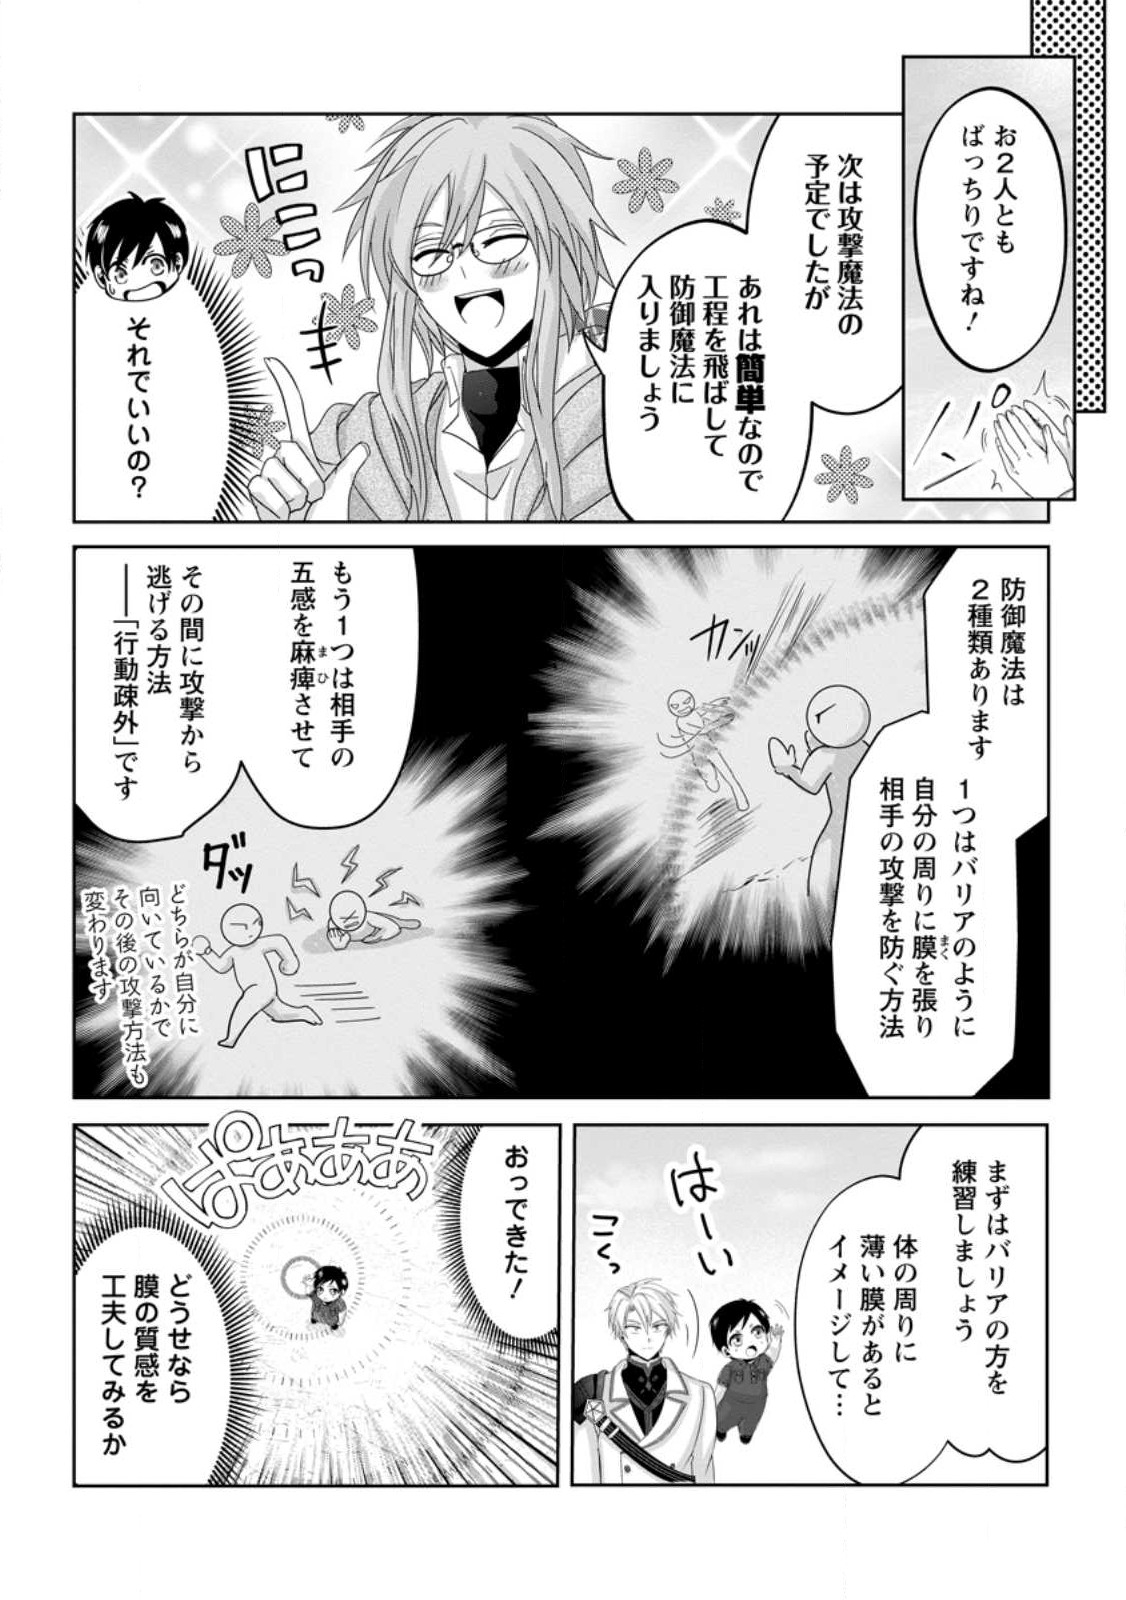 Chittai Ore no Makikomare Isekai Seikatsu - Chapter 6.2 - Page 8